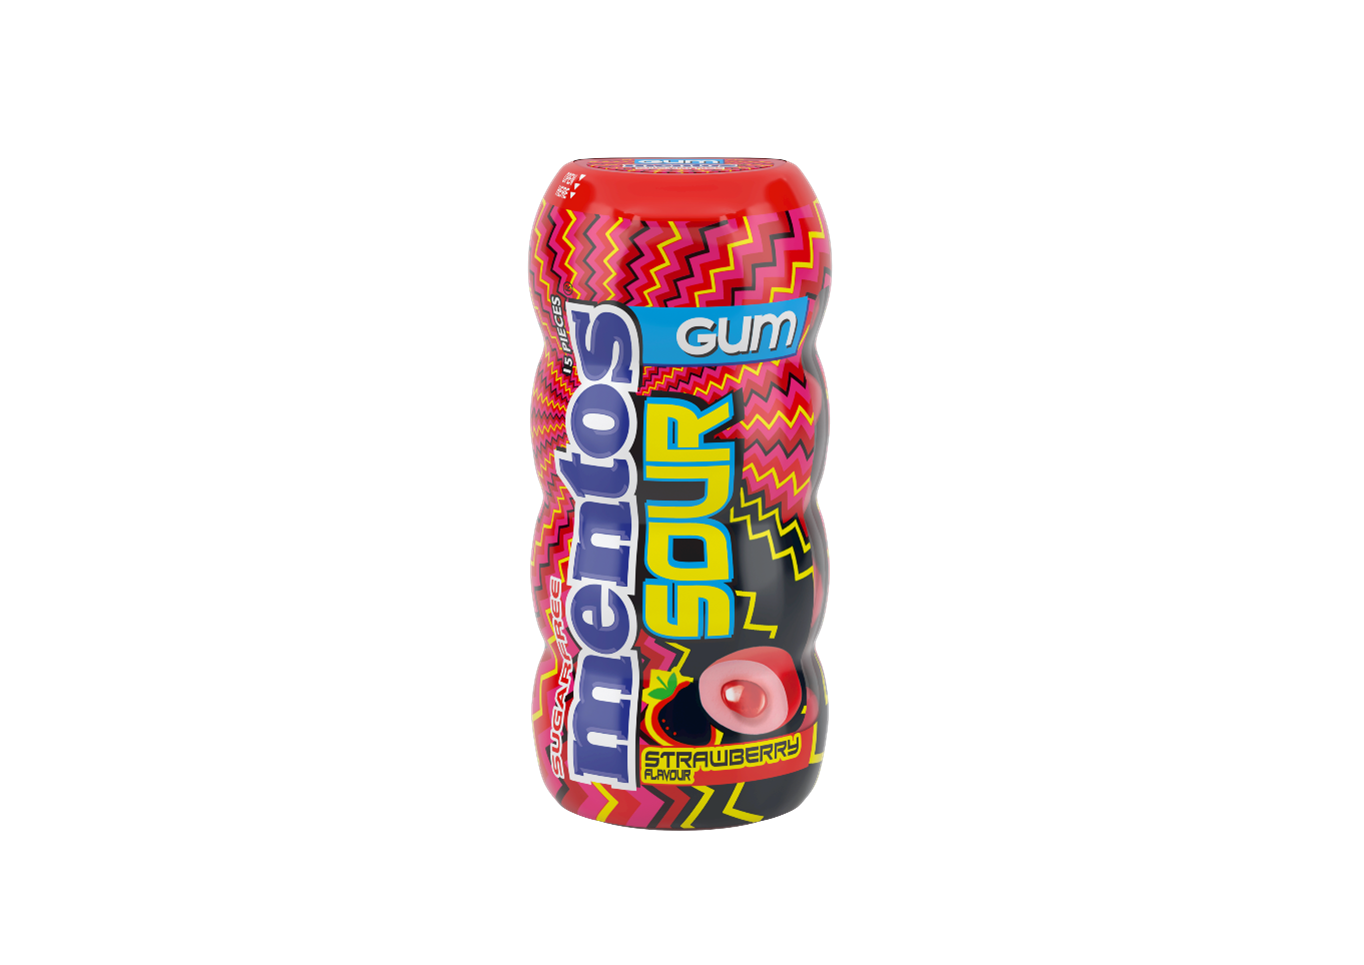 Mentos enters new market with tangy Sour Gum